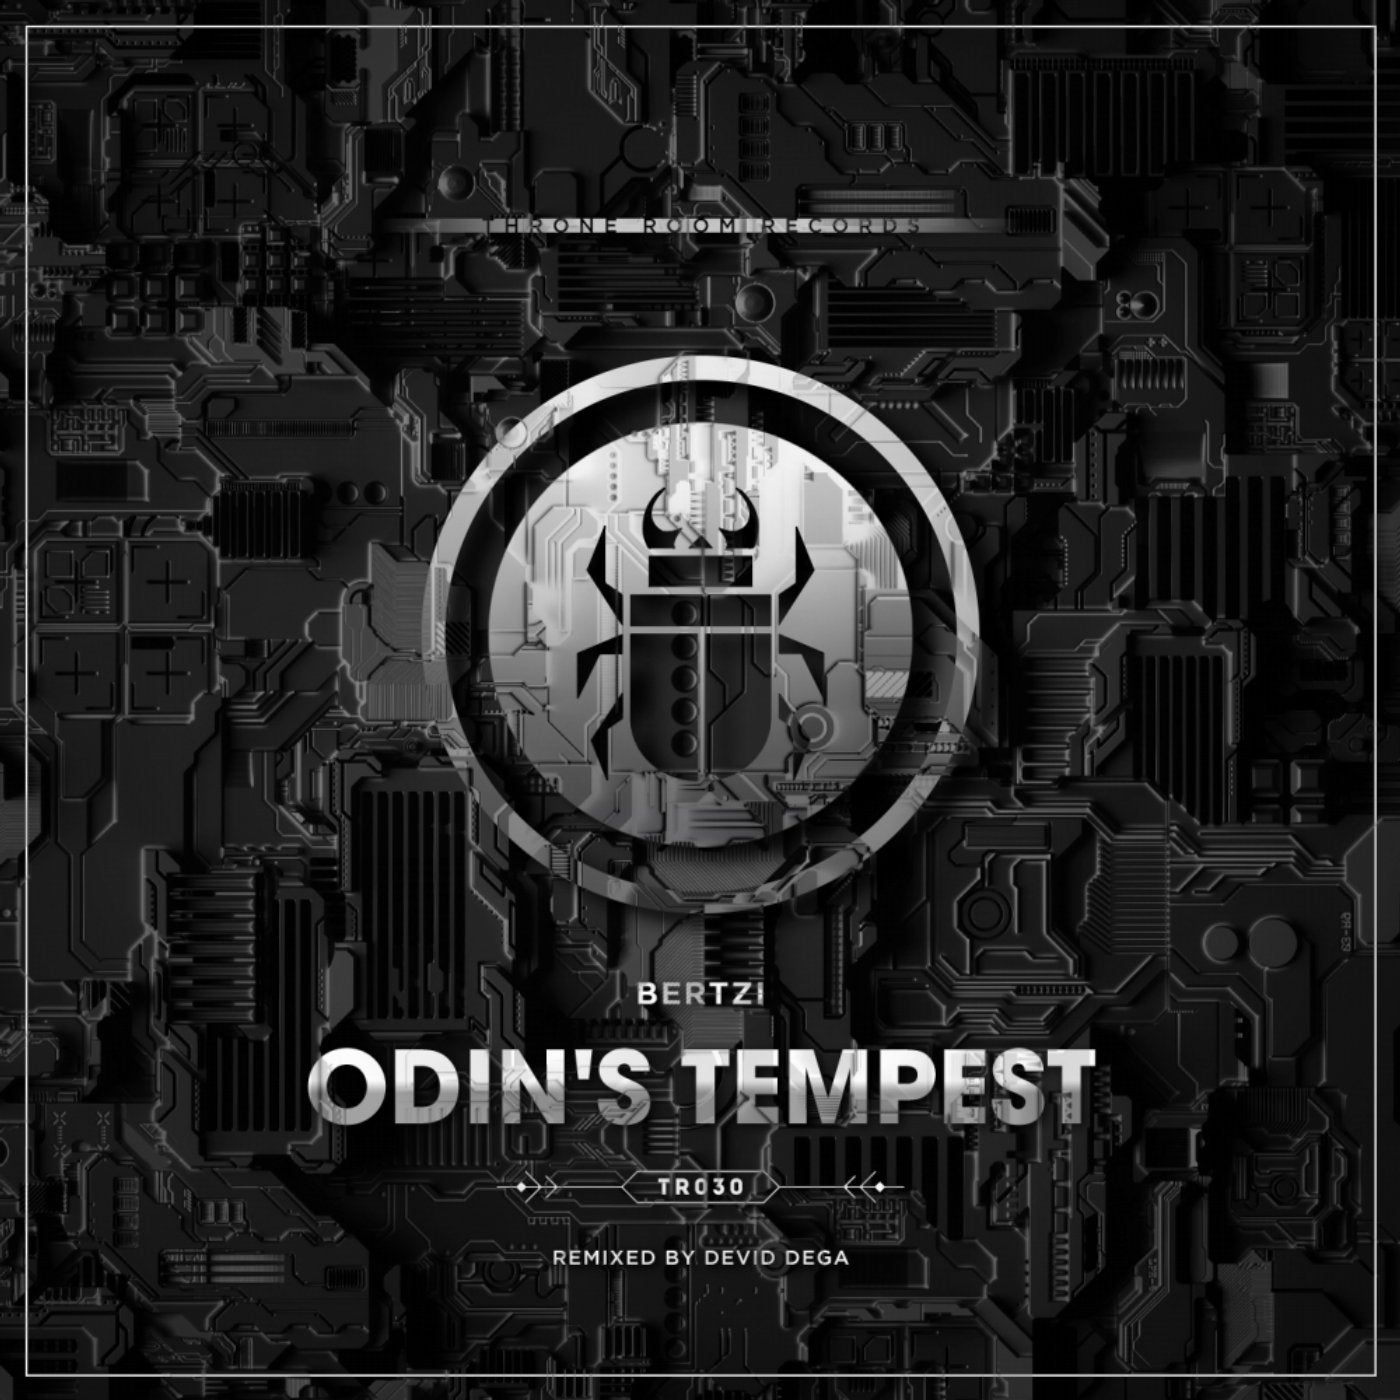 Odins' Tempest